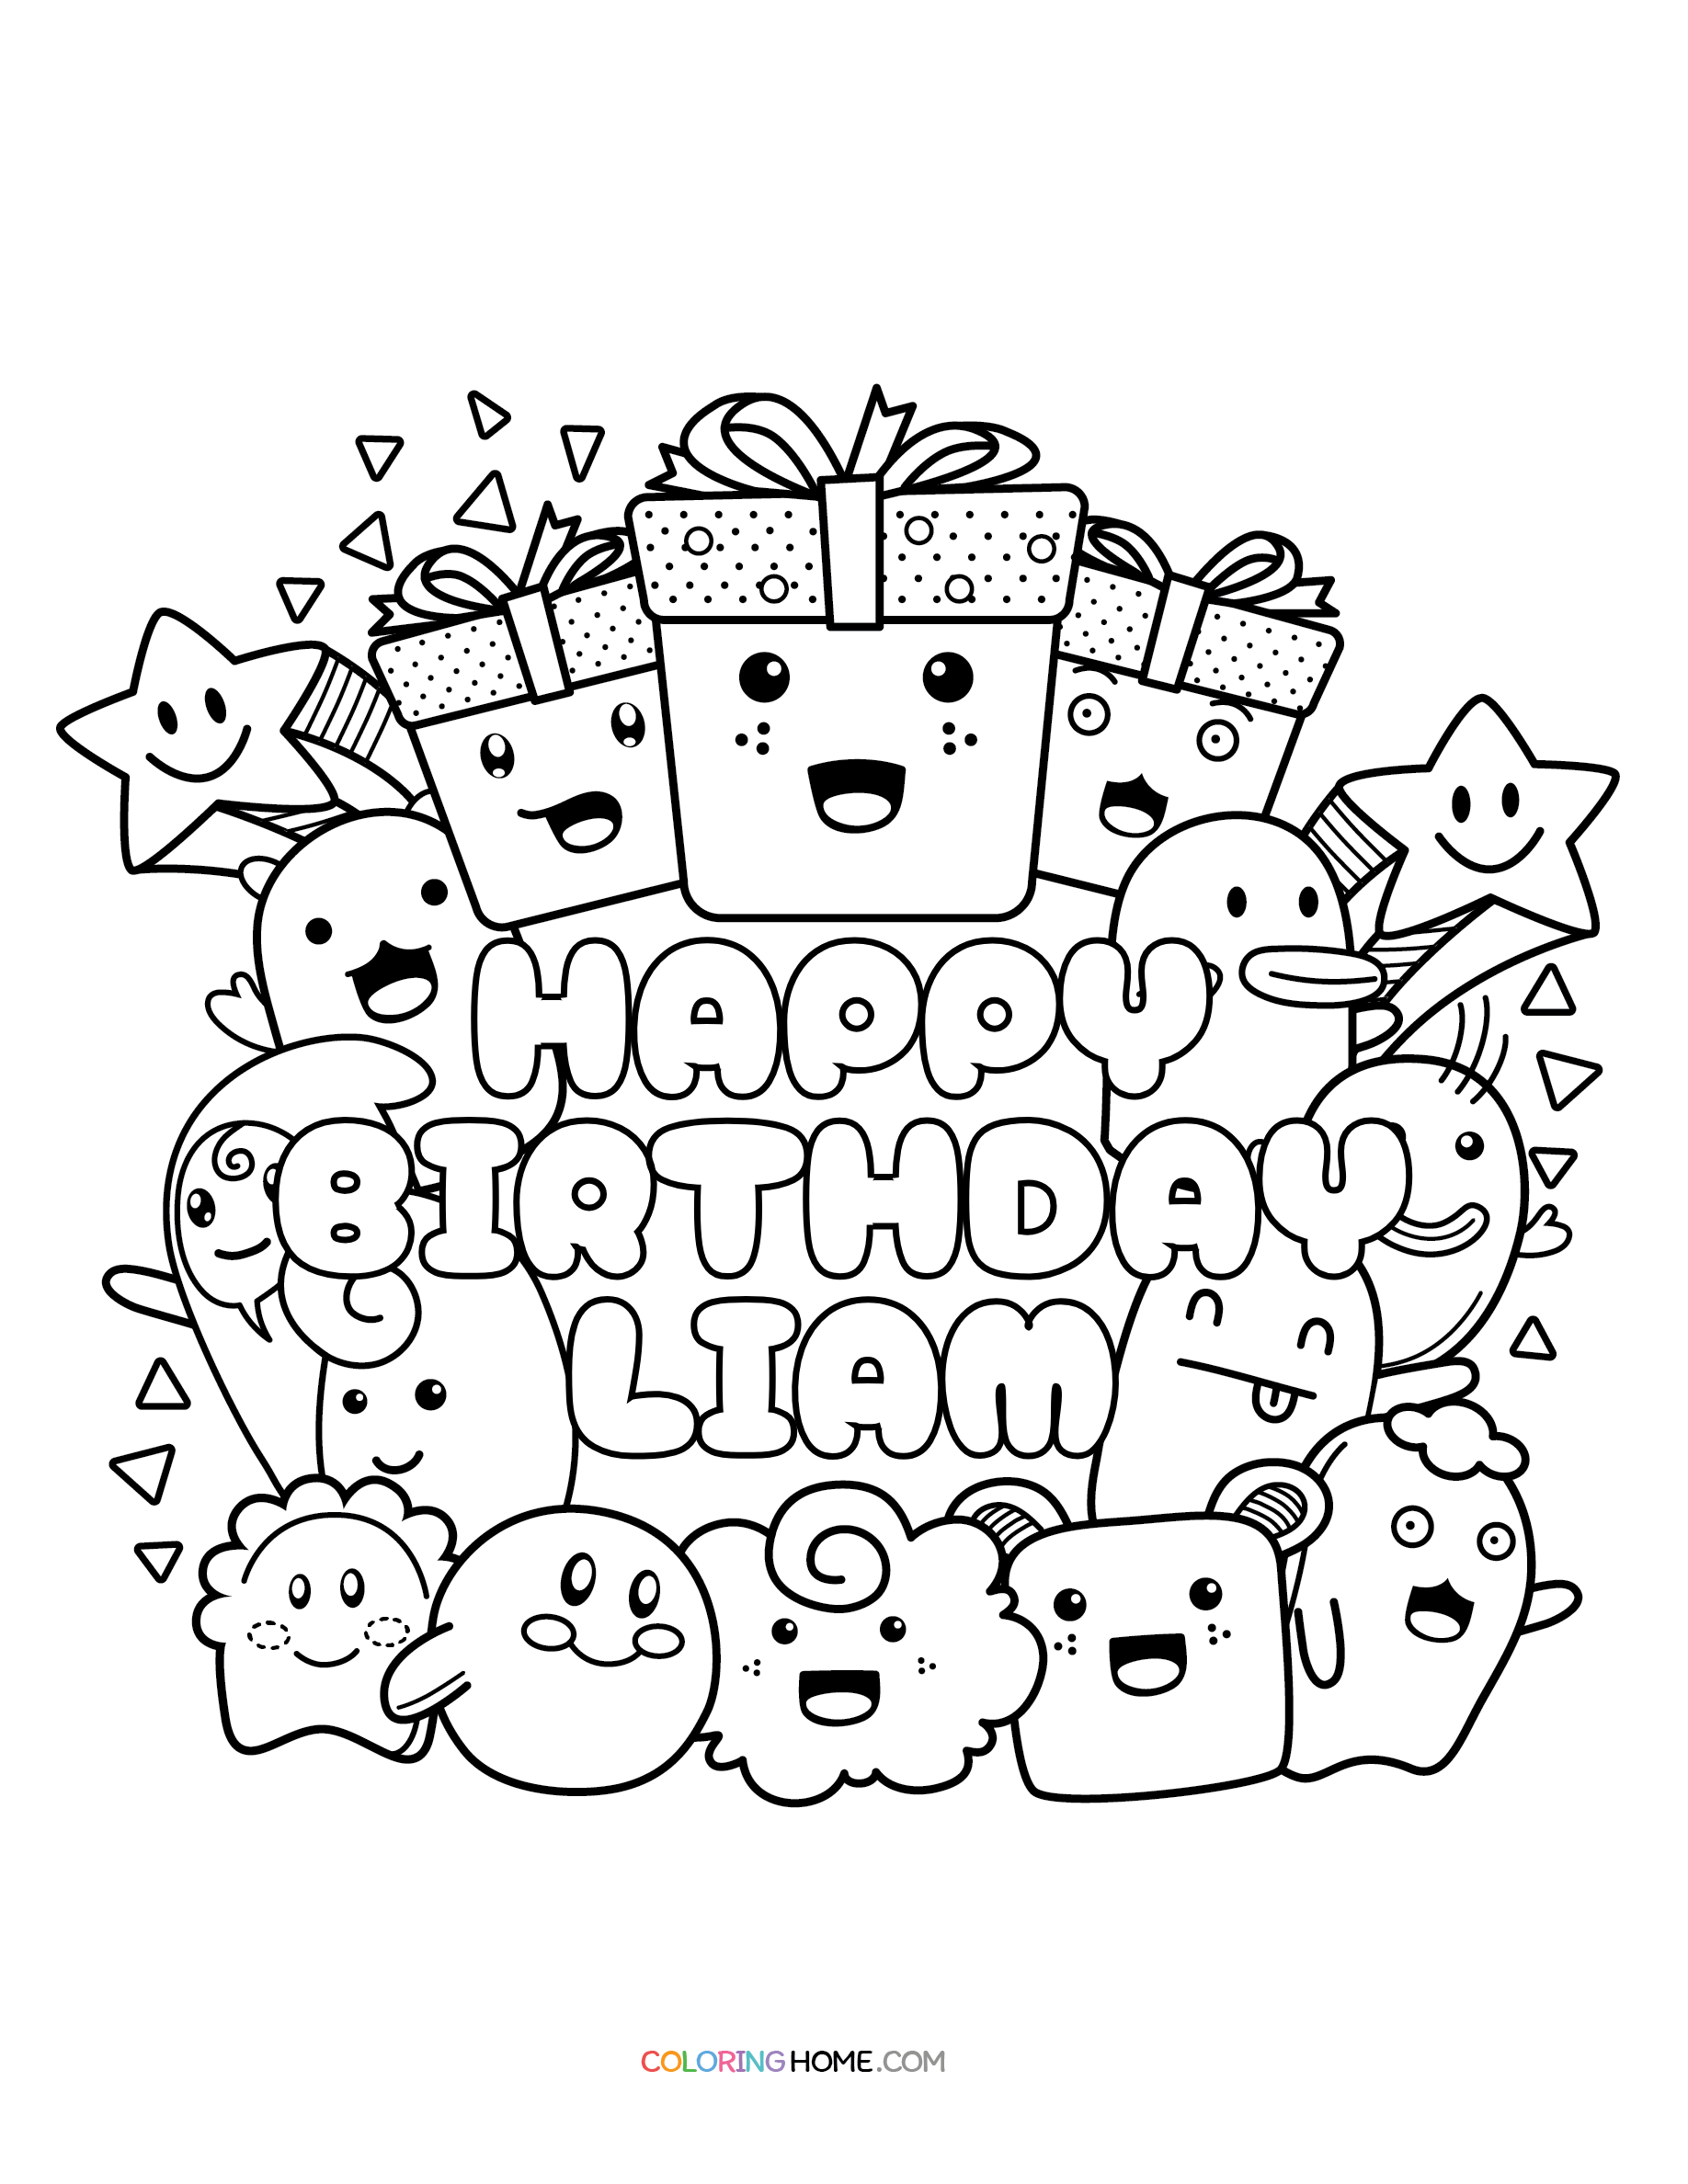 Happy Birthday Liam coloring page